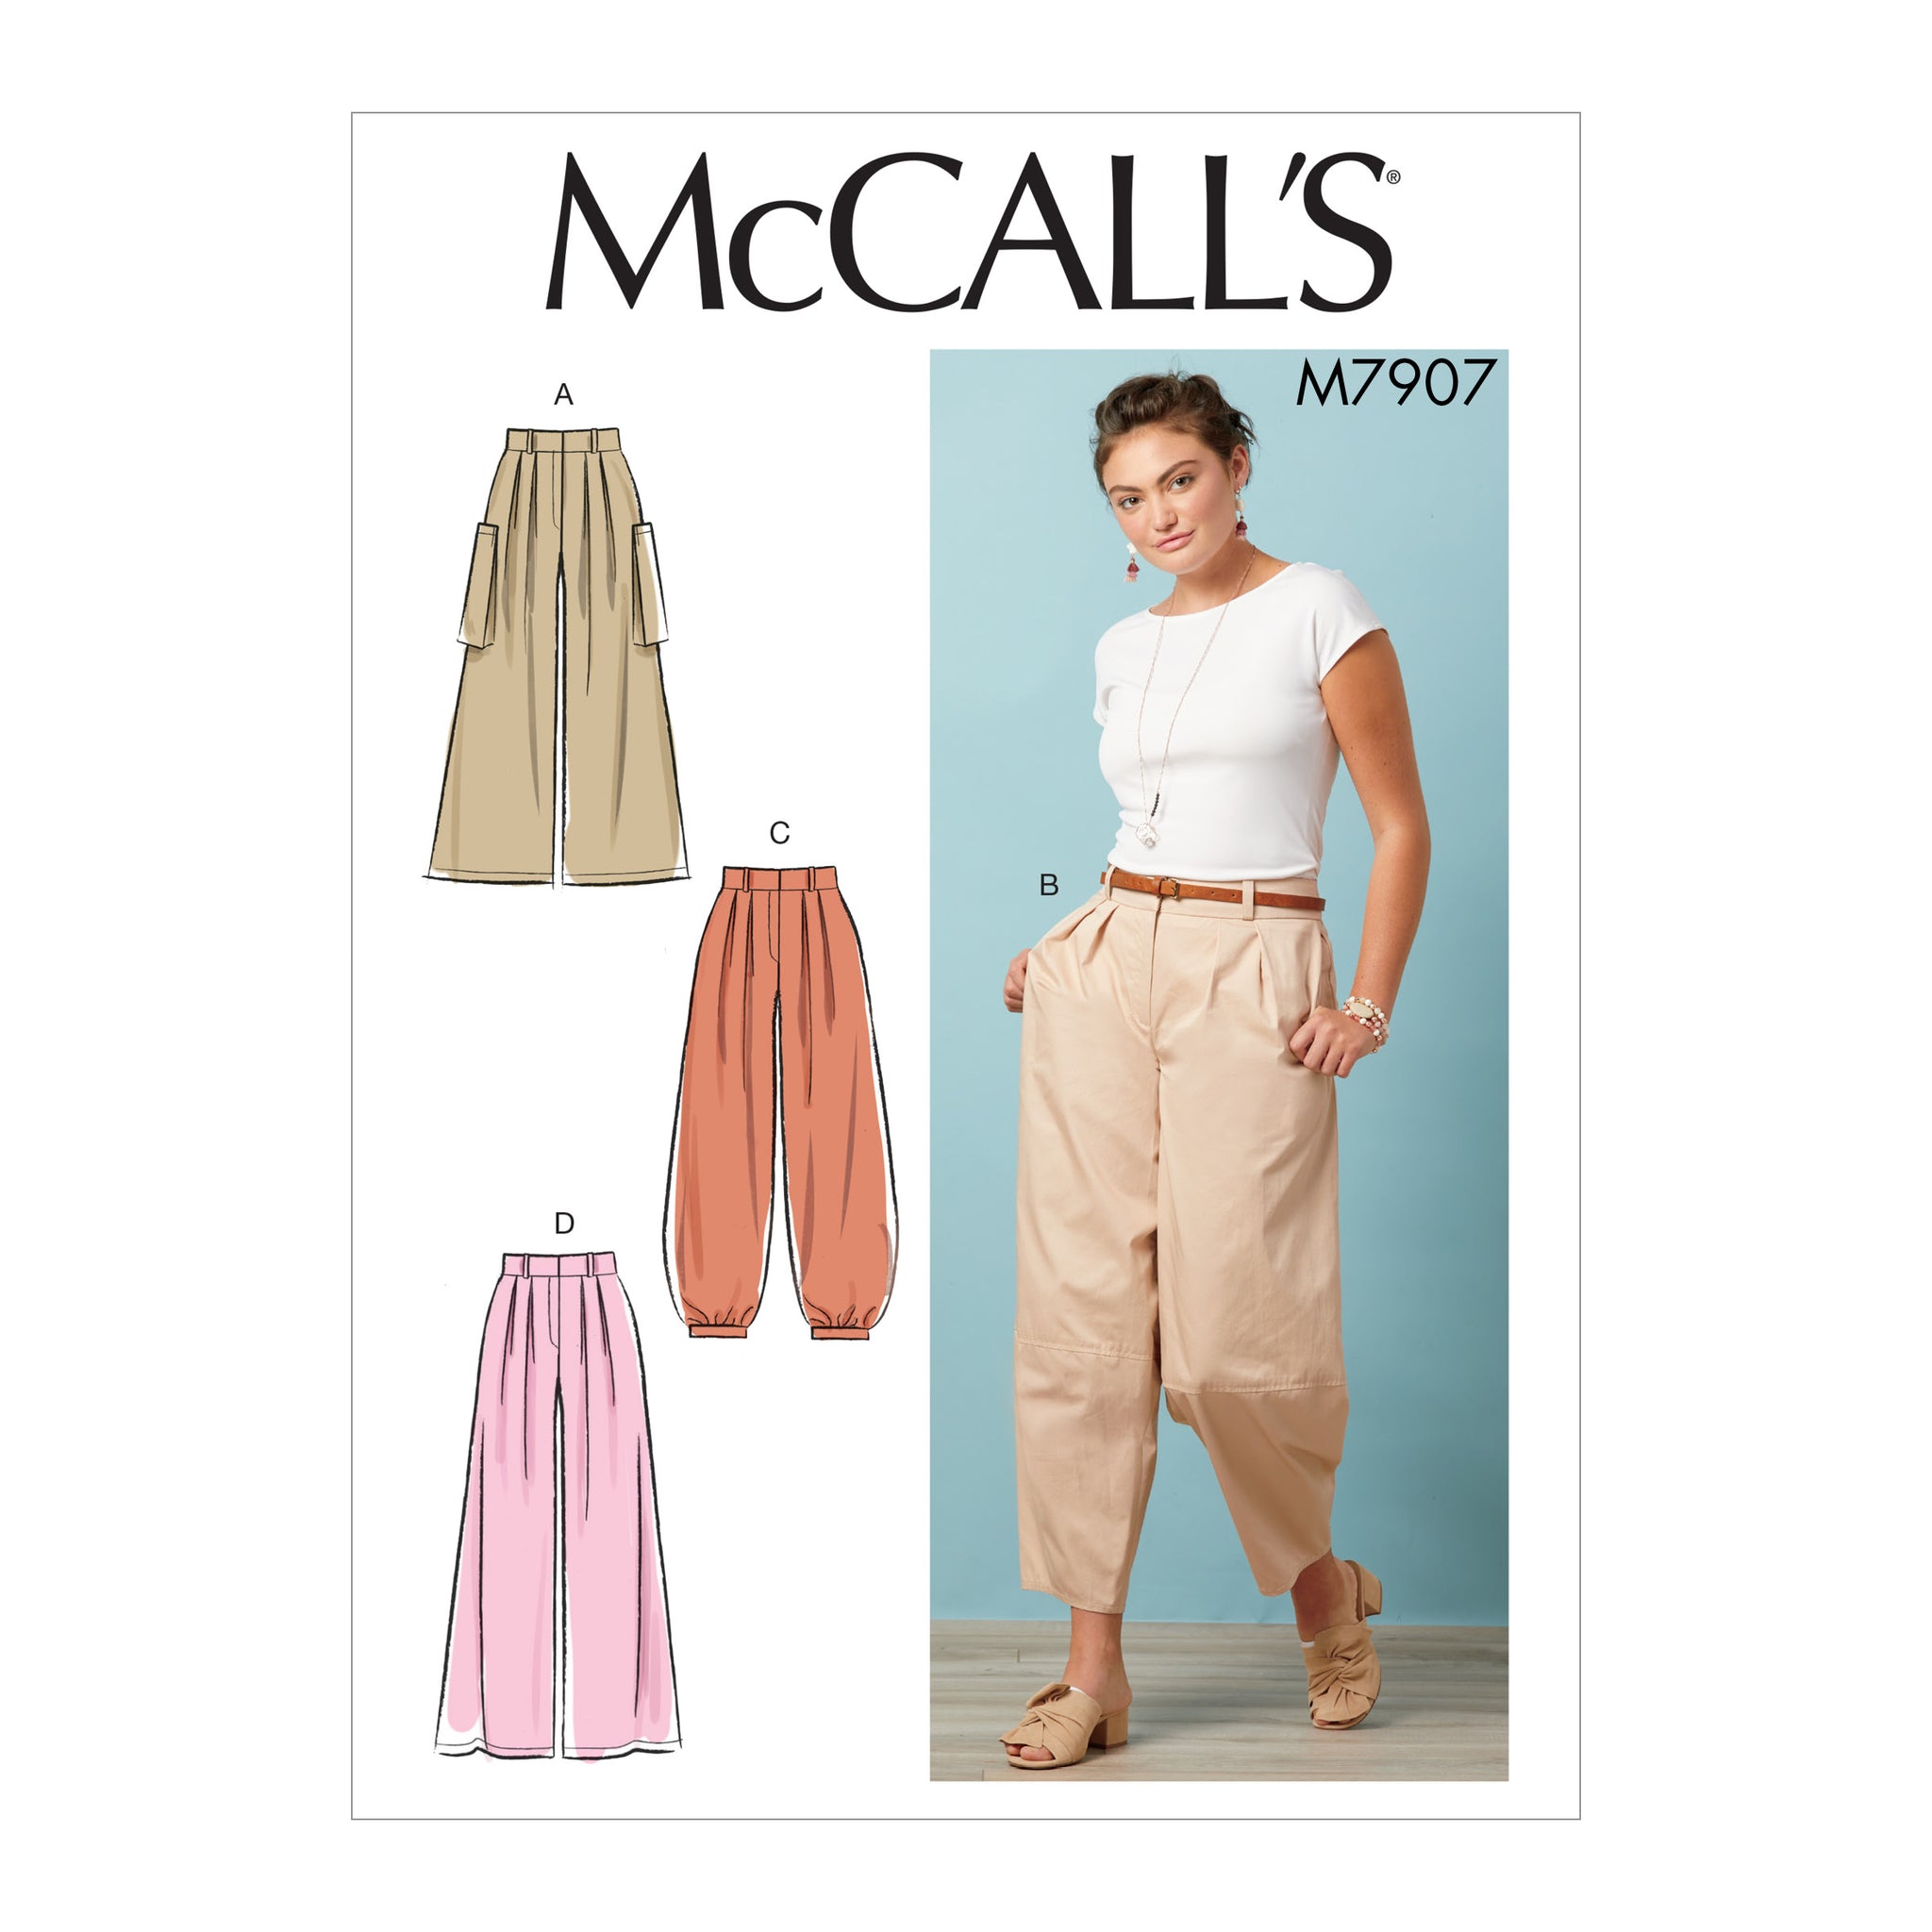 McCalls Mercer Trousers Sewing Pattern M8148 1824  Hobbycraft